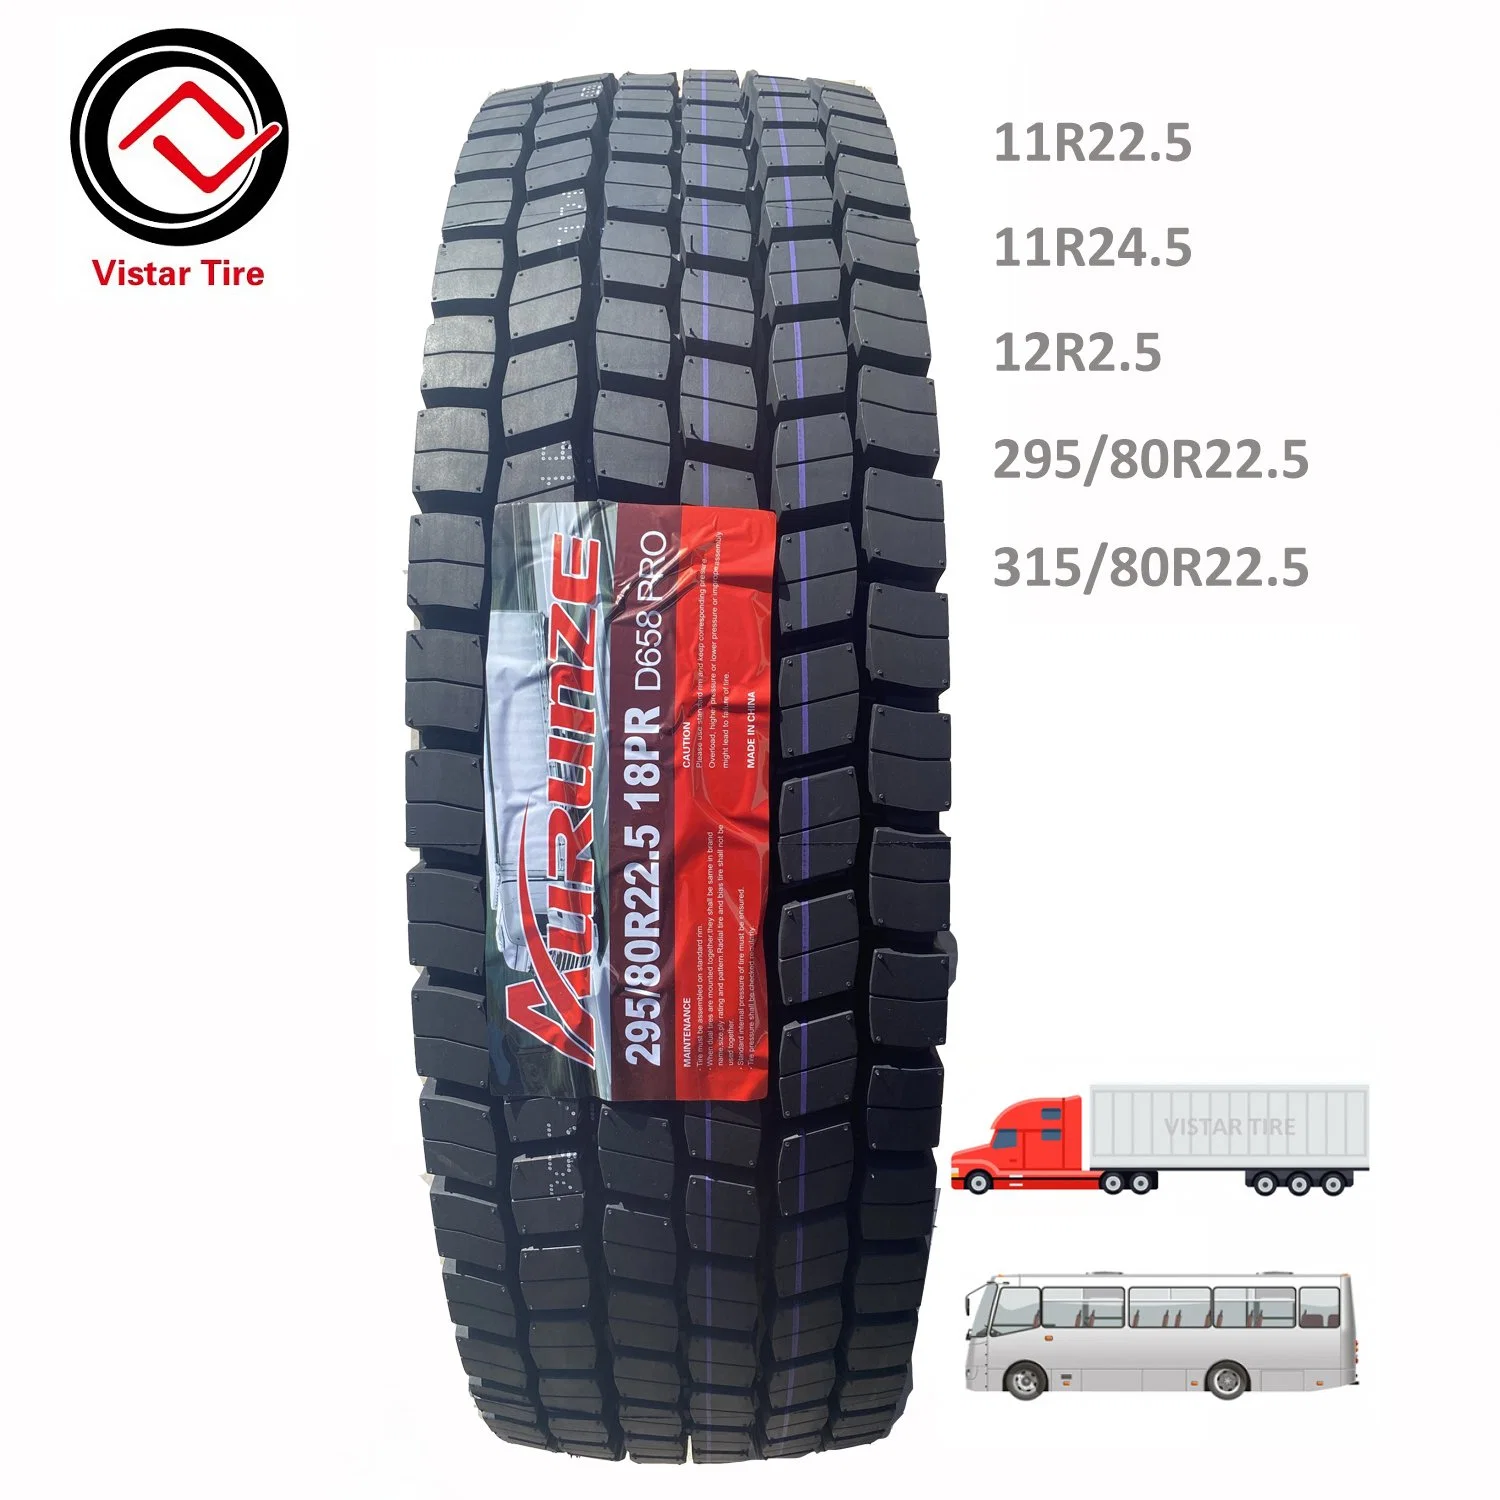 Advance/Doublestar/Double Coin/Kunlun/Roadone/Westlake/Chaoyang TBR Truck Tire 215/75r17.5 235/75r17.5 11r22.5 265/70r19.5 315/80r22.5 13r22.5 385/65r22.5 Pneus